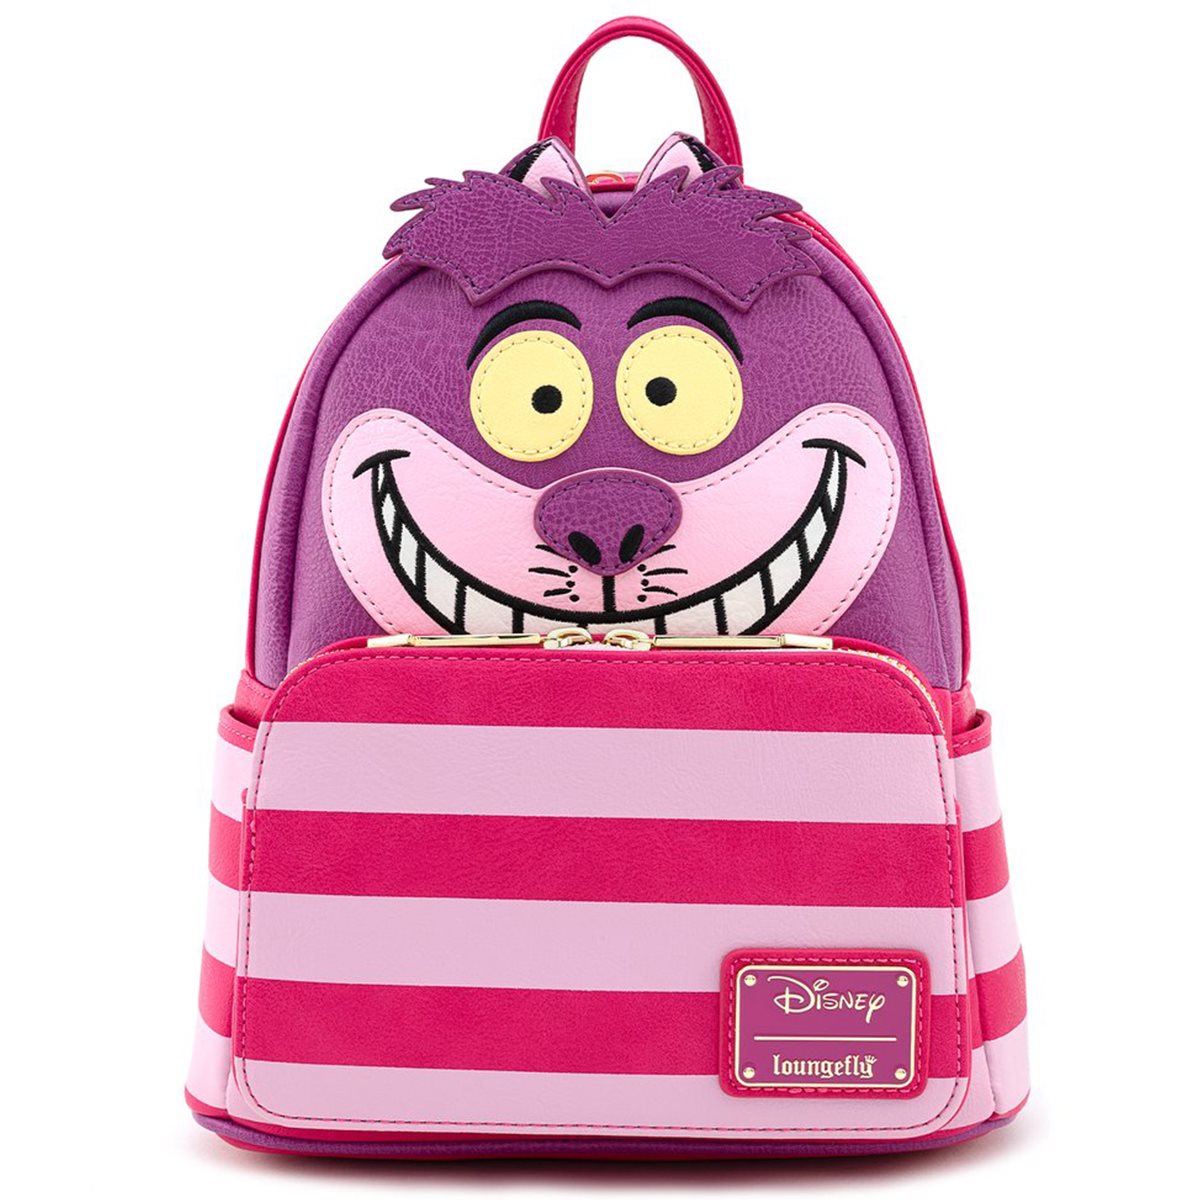 Tondgs Cheshire CAT Children Pure CottonBackpack Daypack Bookbag Laptop School Bag Black